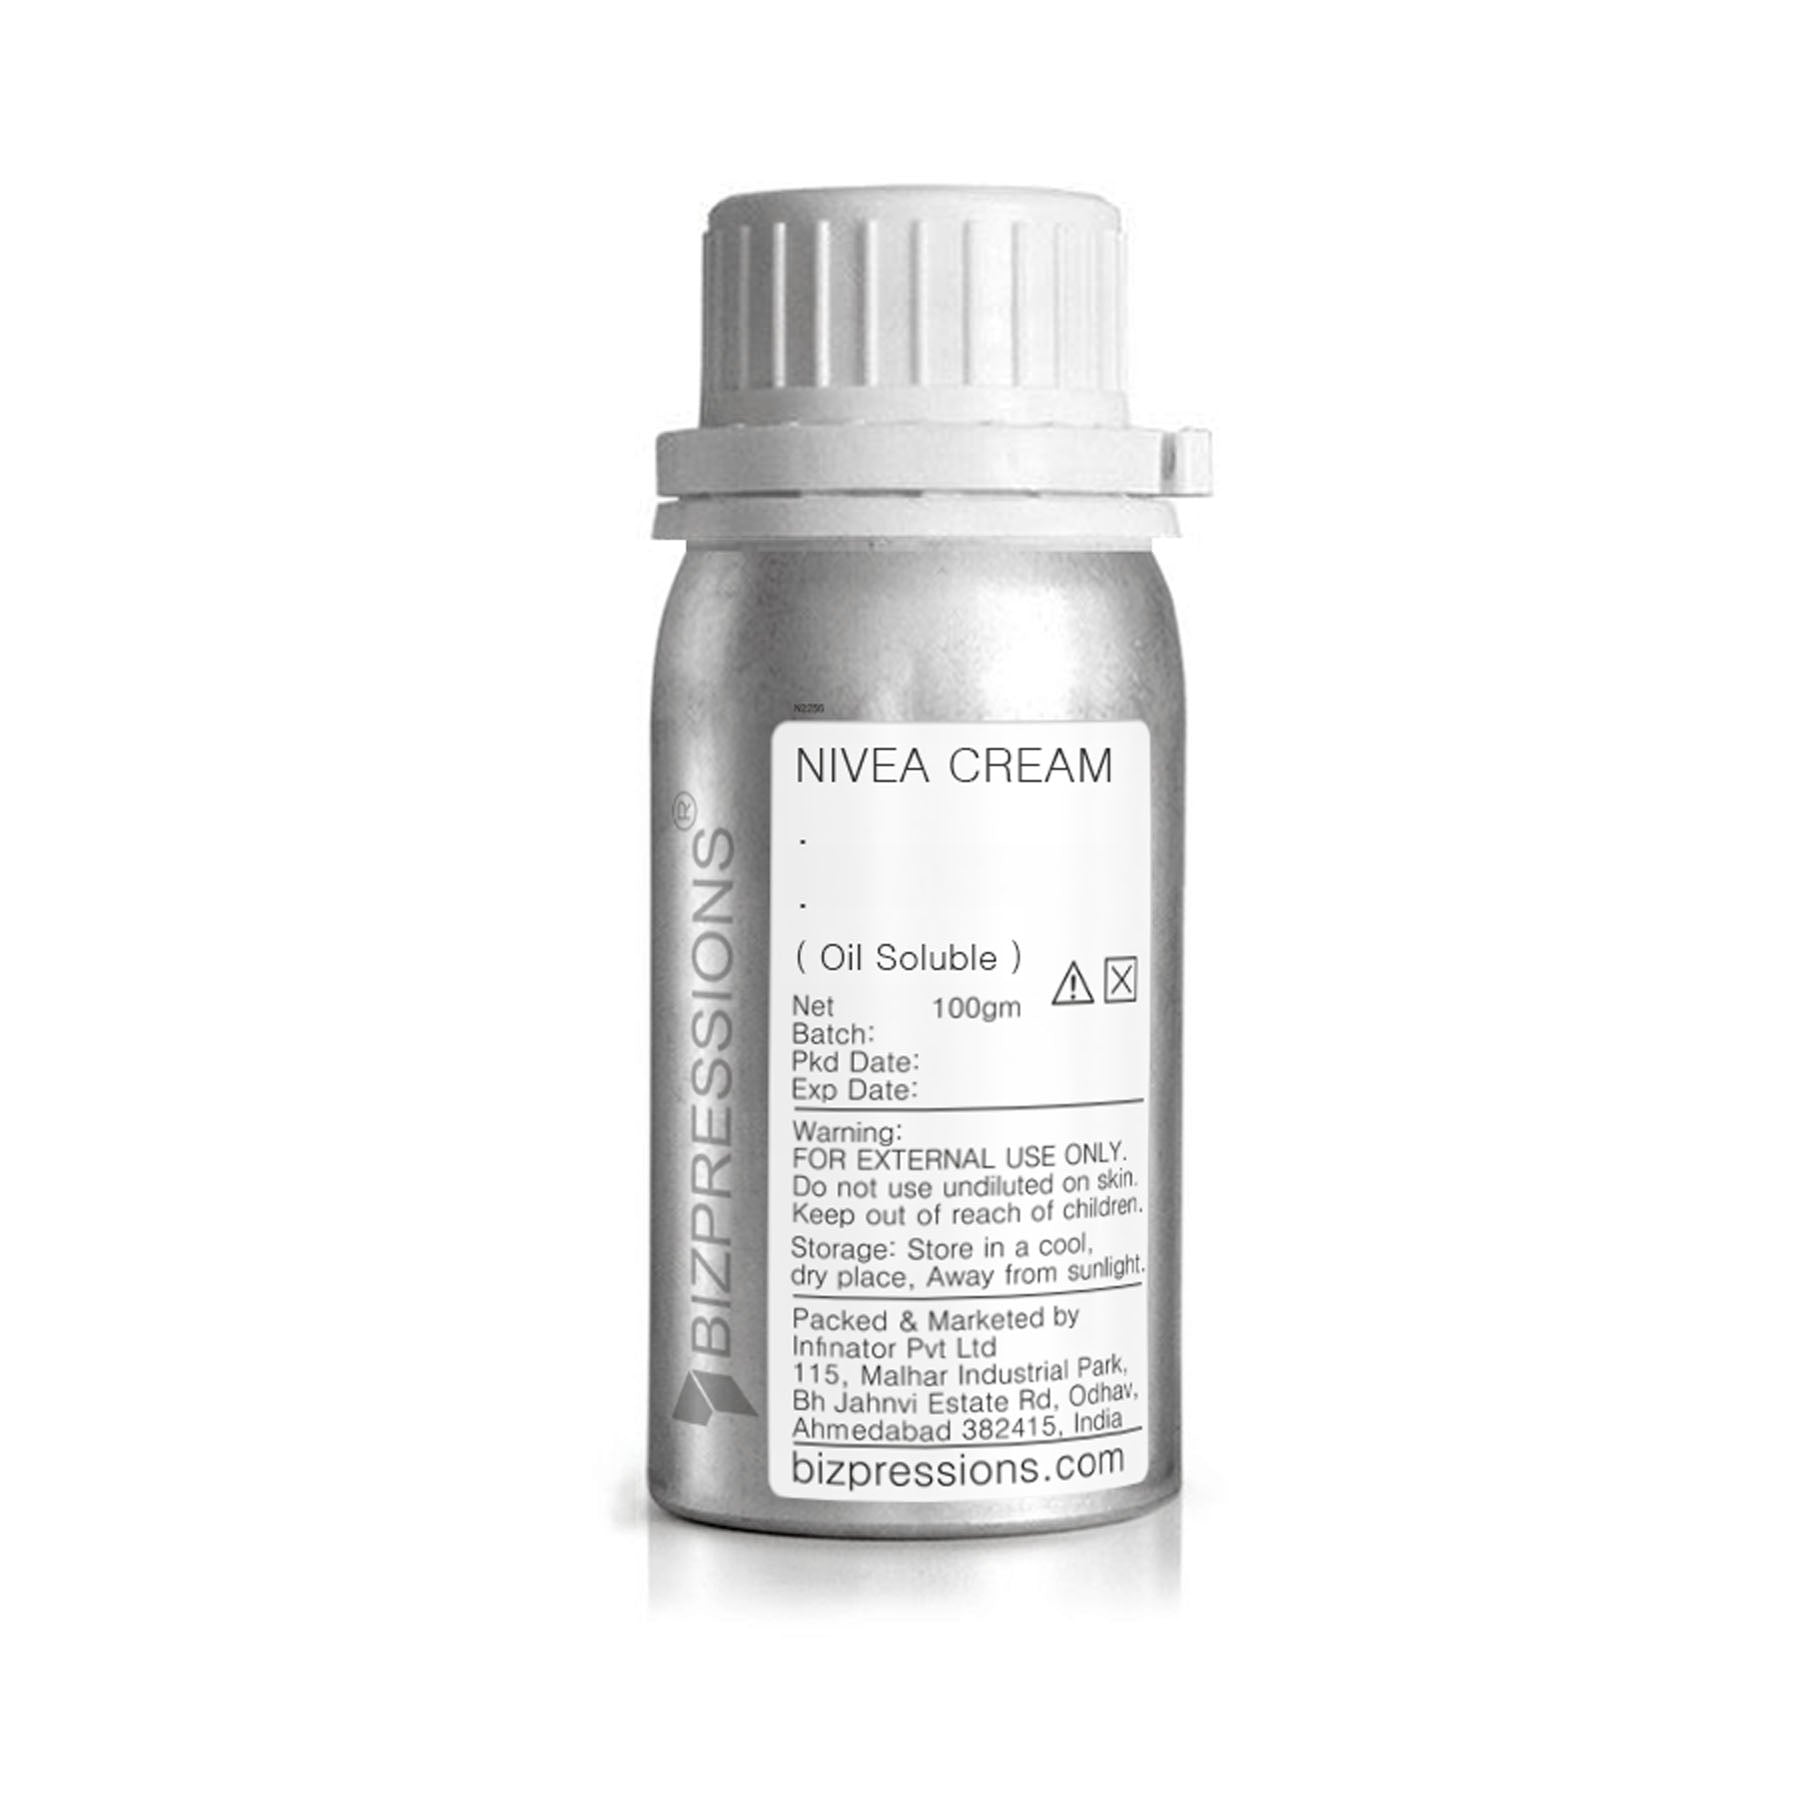 NIVEA CREAM - Fragrance ( Oil Soluble ) - 100 gm